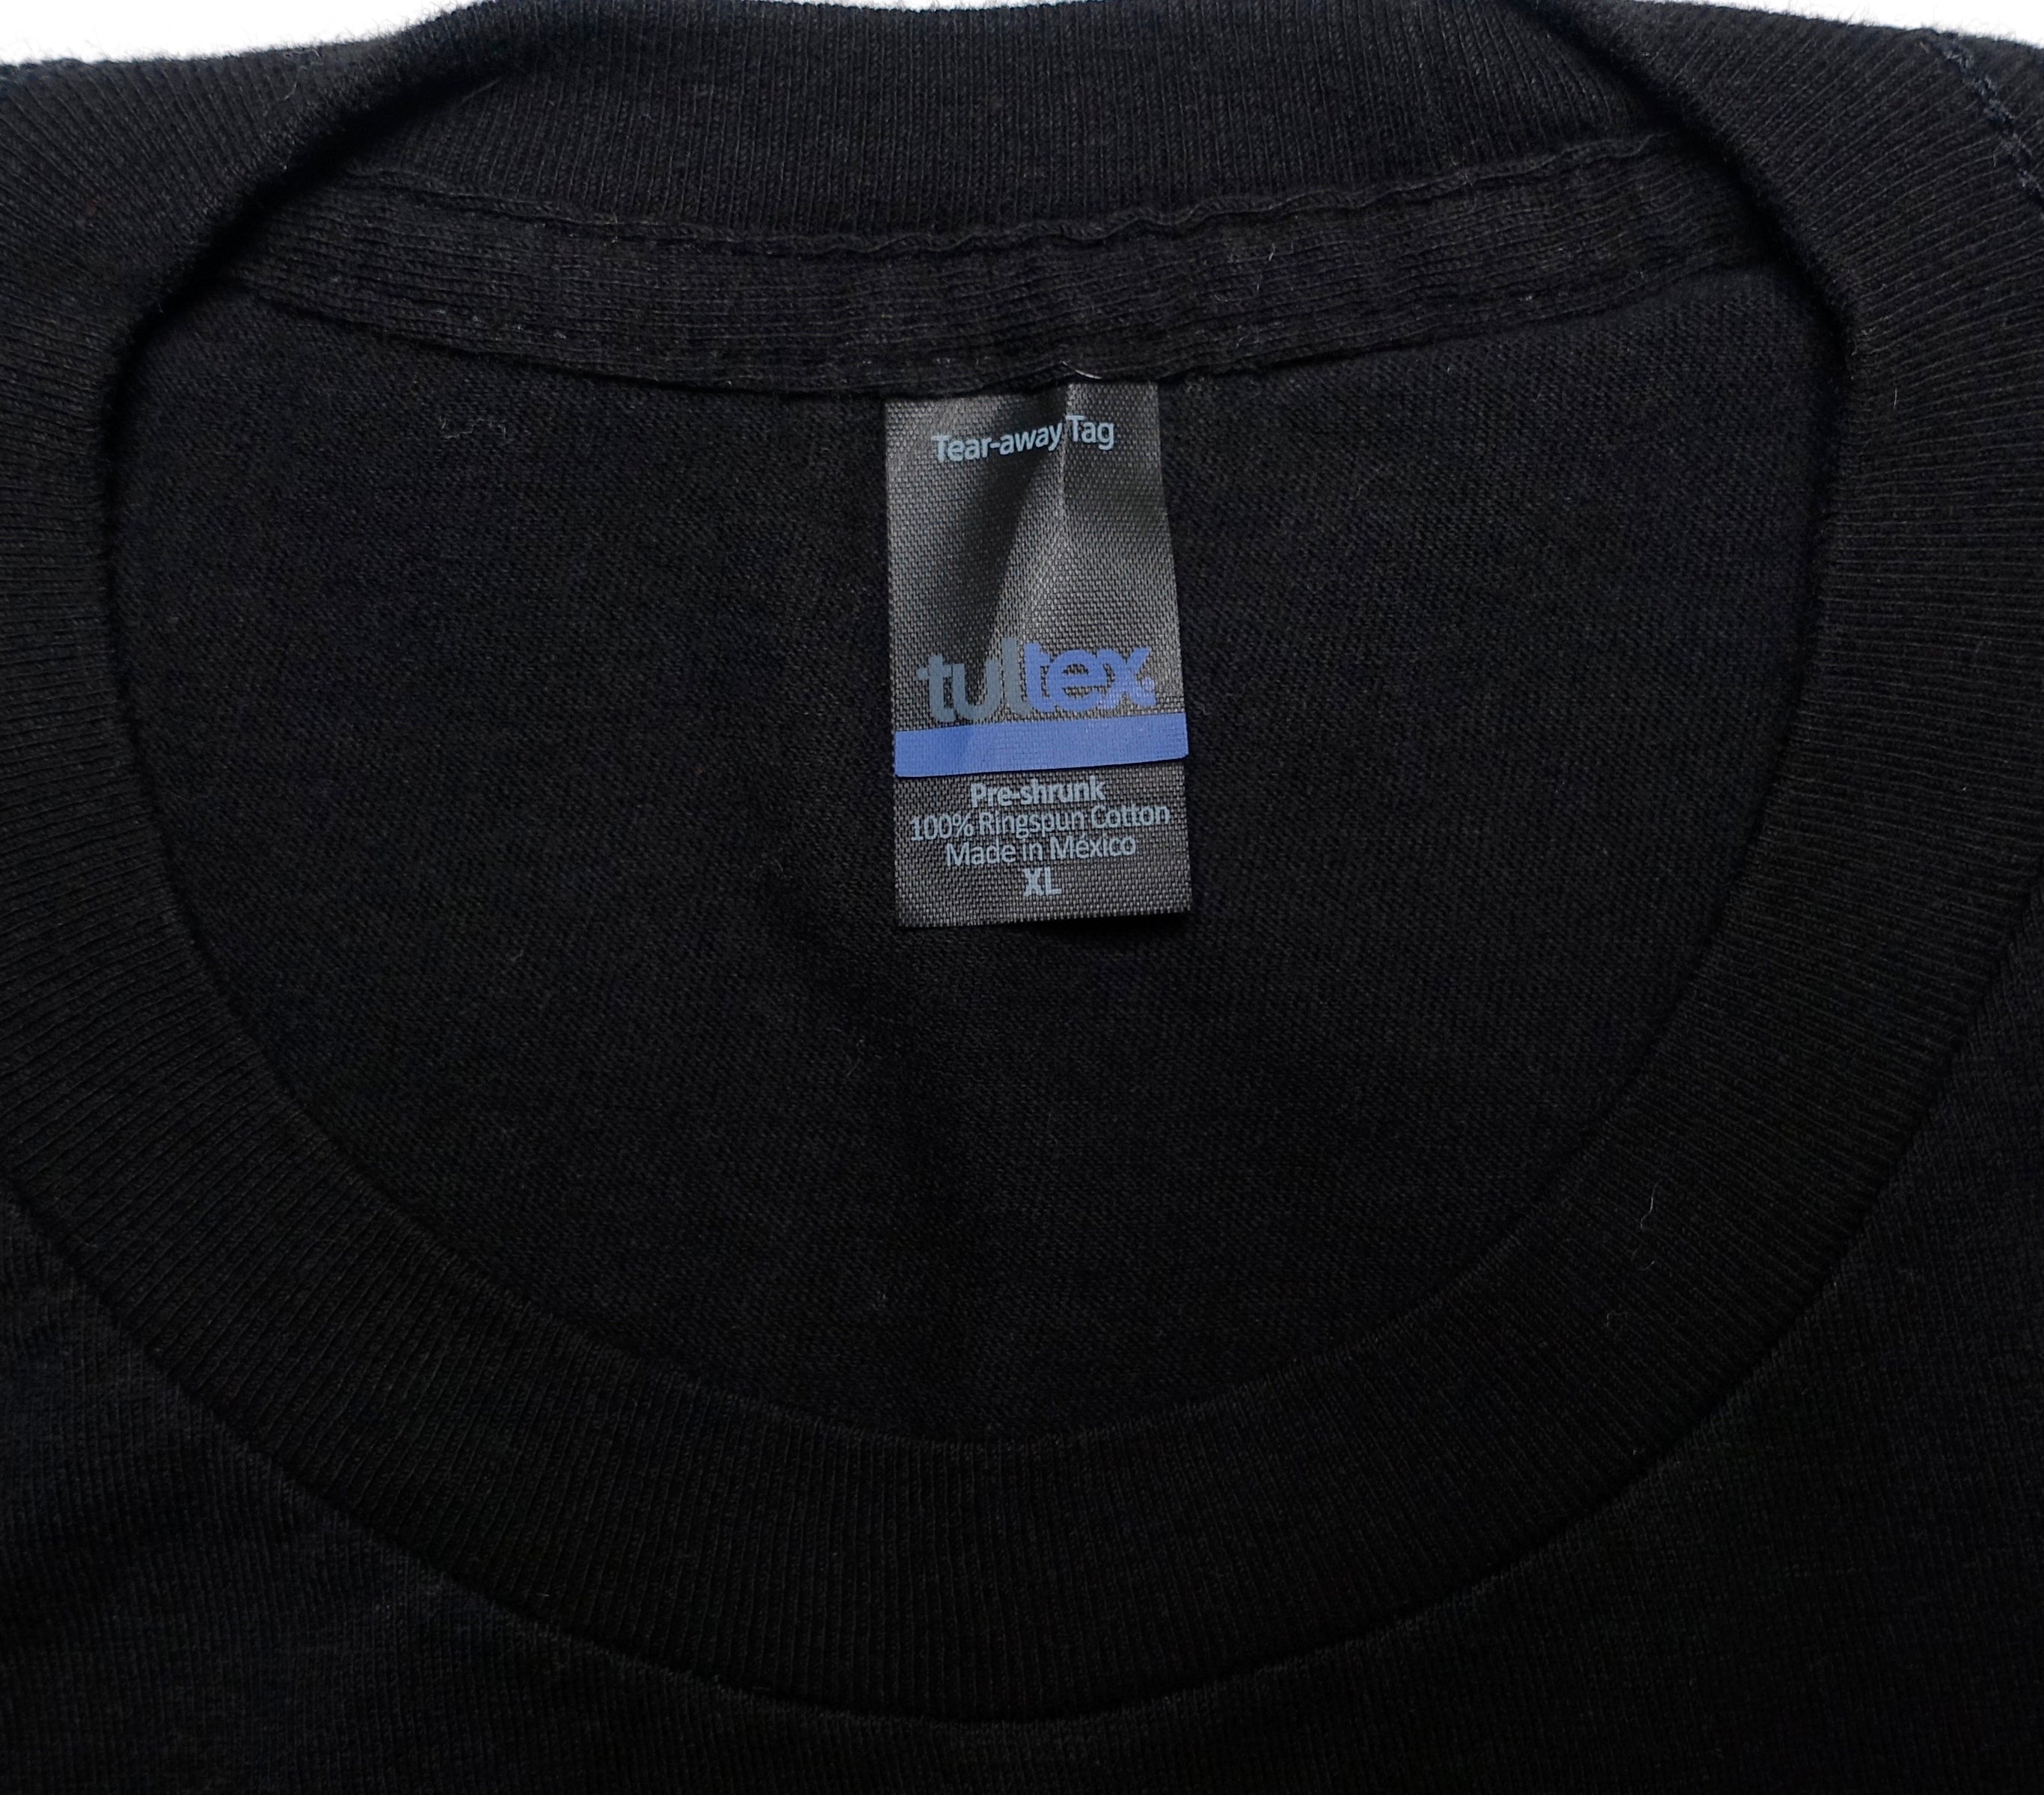 Morrissey - Low In High School LA Pop Up Store Shirt Size XL